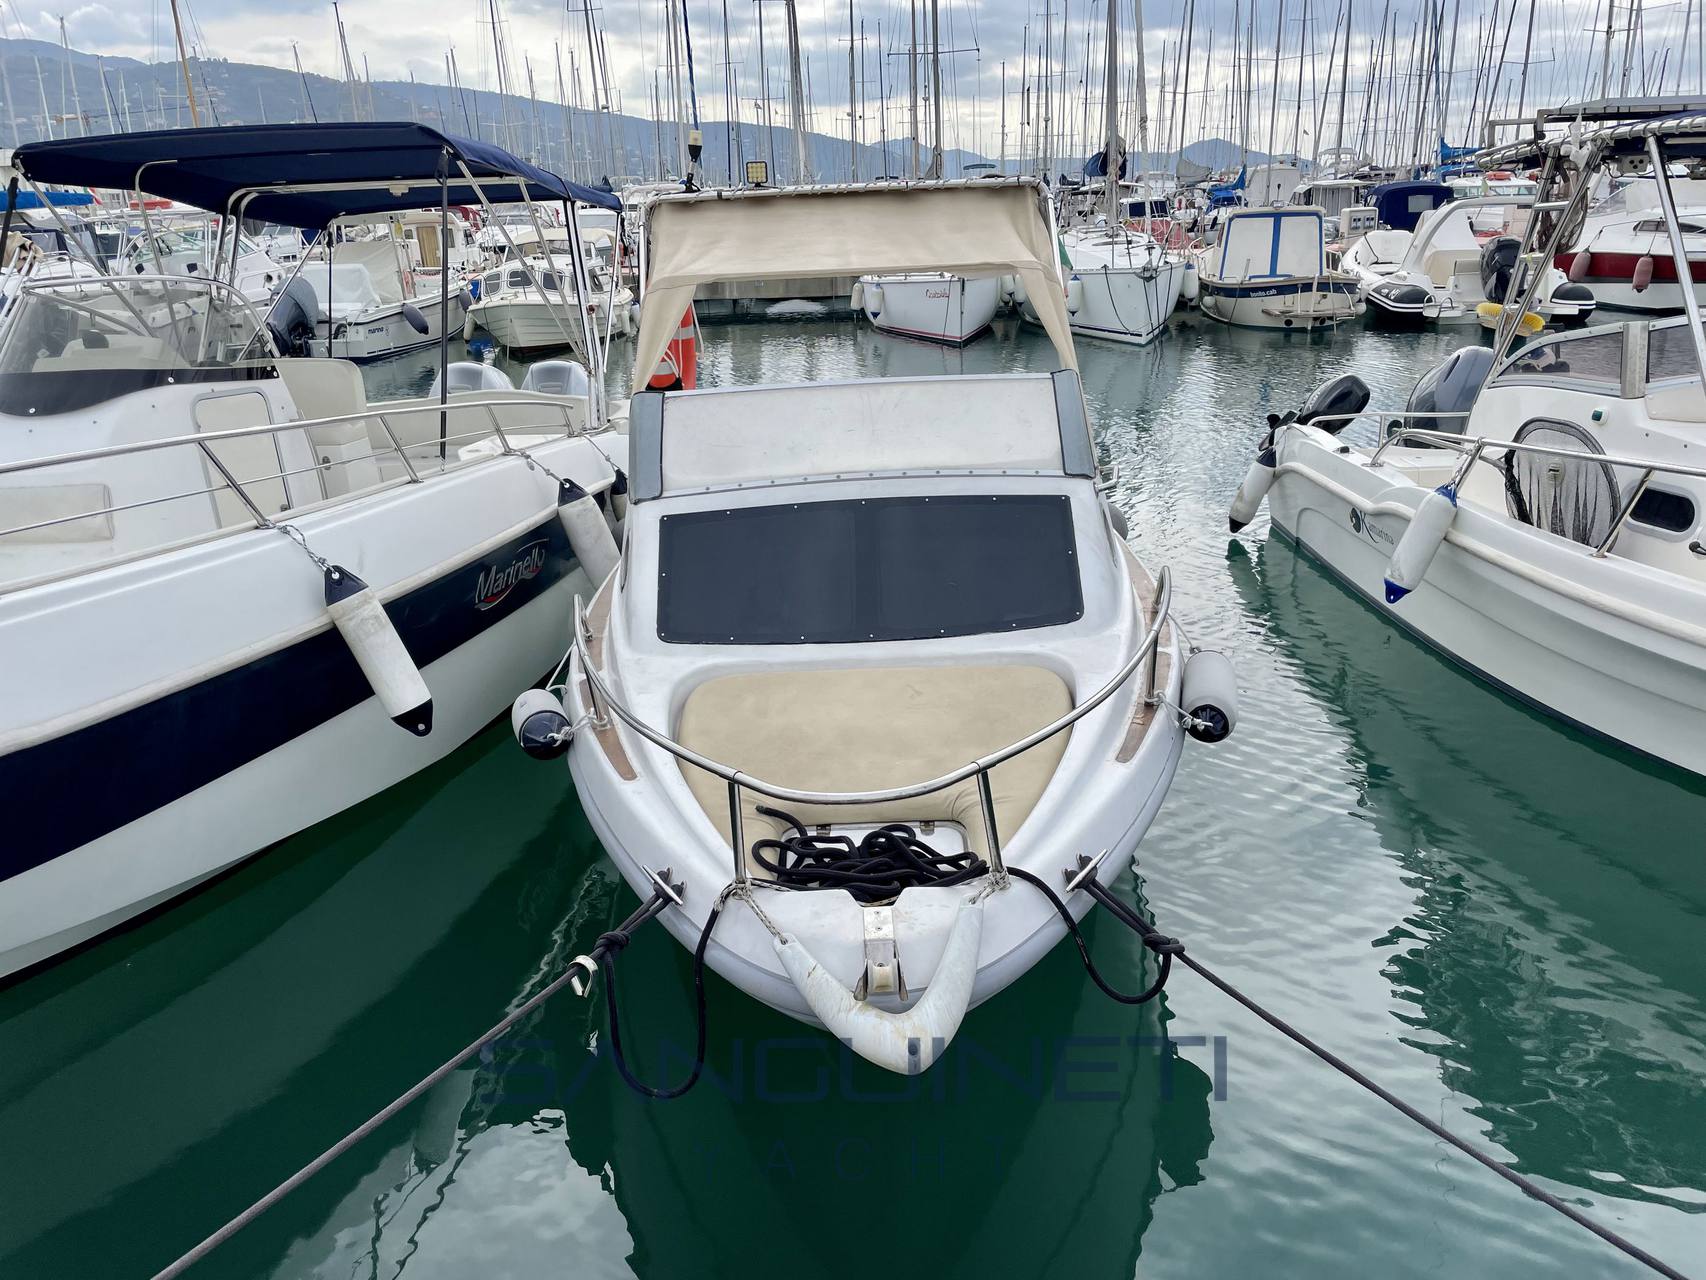 Conus 600 Motor boat used for sale